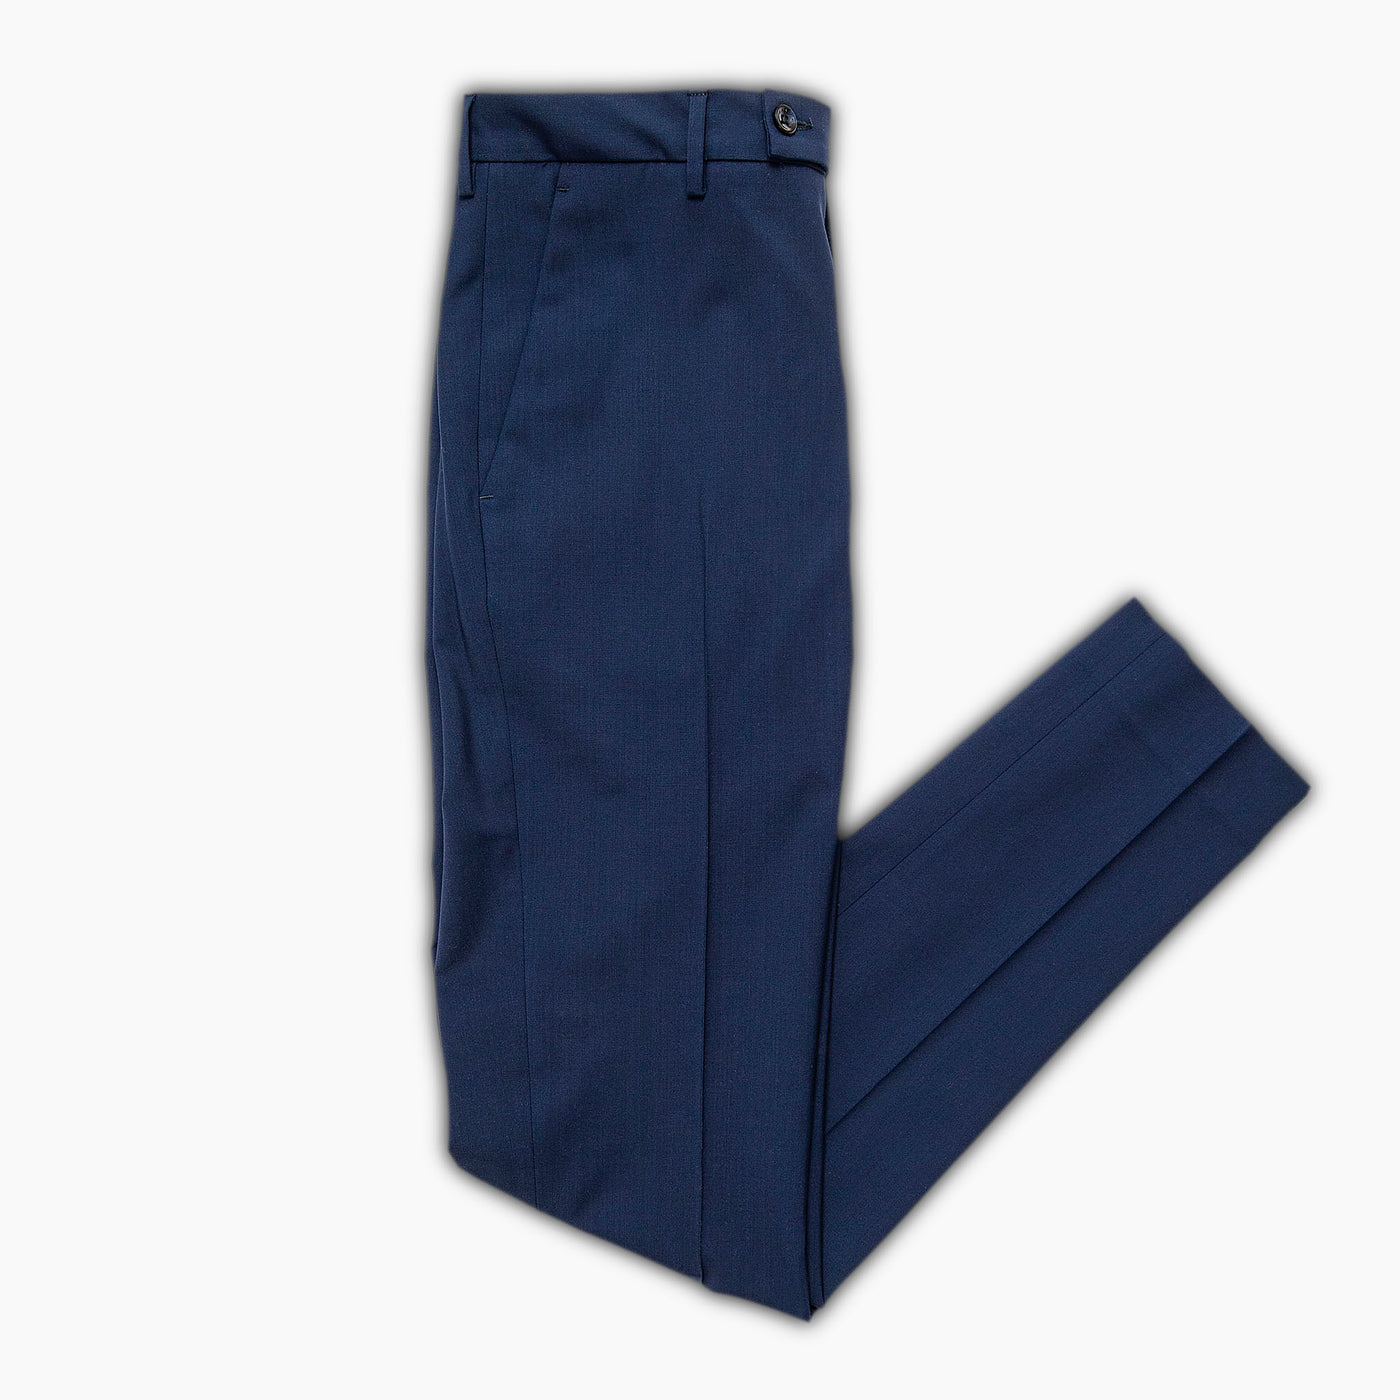 Boris Chino Pants water repellent active wool (dark blue)